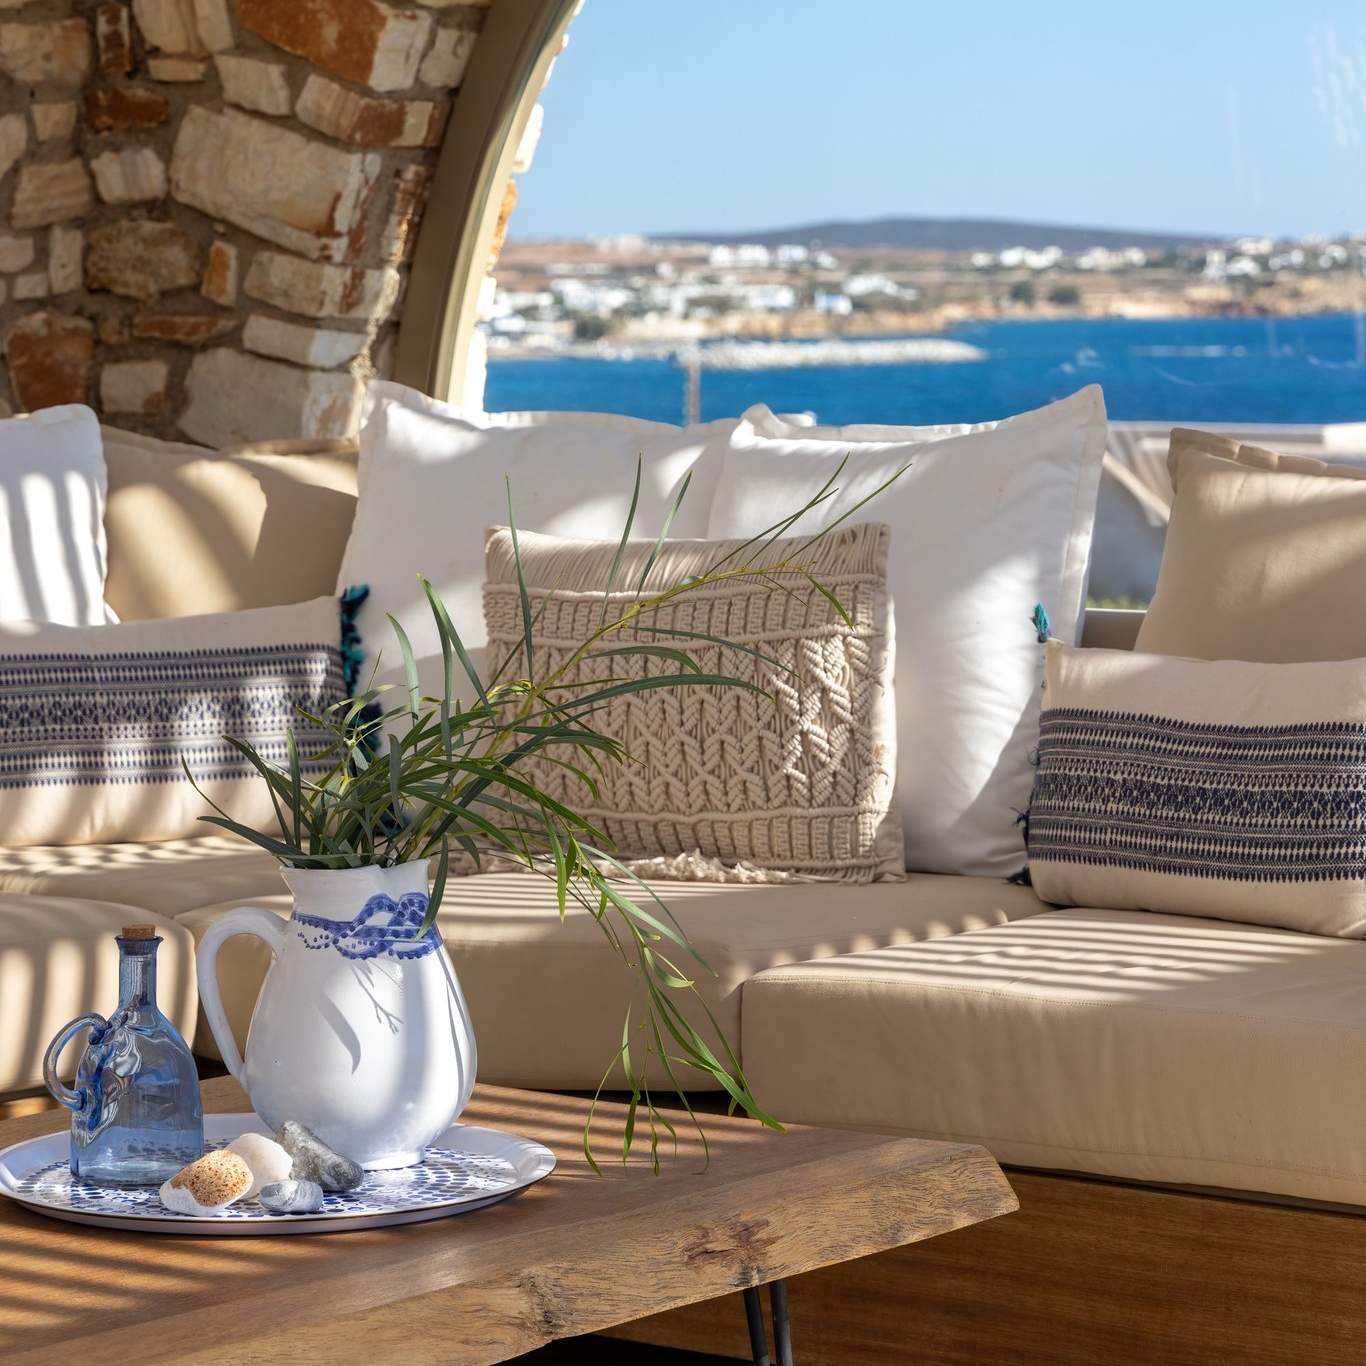 Almyra. Unwind in our chic exterior lounge, where the comfort of plush seating meets the endless embrace of the Aegean horizon. 
.
#AmalgamHomes #ArtOfComfort #GreekGetaways #IslandEscapes #SerenitySeeker #CoastalCharm #MinimalistLiving #GreekIslands #CycladesMagic #SeasideBliss #VisitGreece #DiscoverGreece #TravelInspiration #SavorTheMoment #DreamDestinations #TranquilRetreats #Paros #Naxos #Mykonos #Tinos